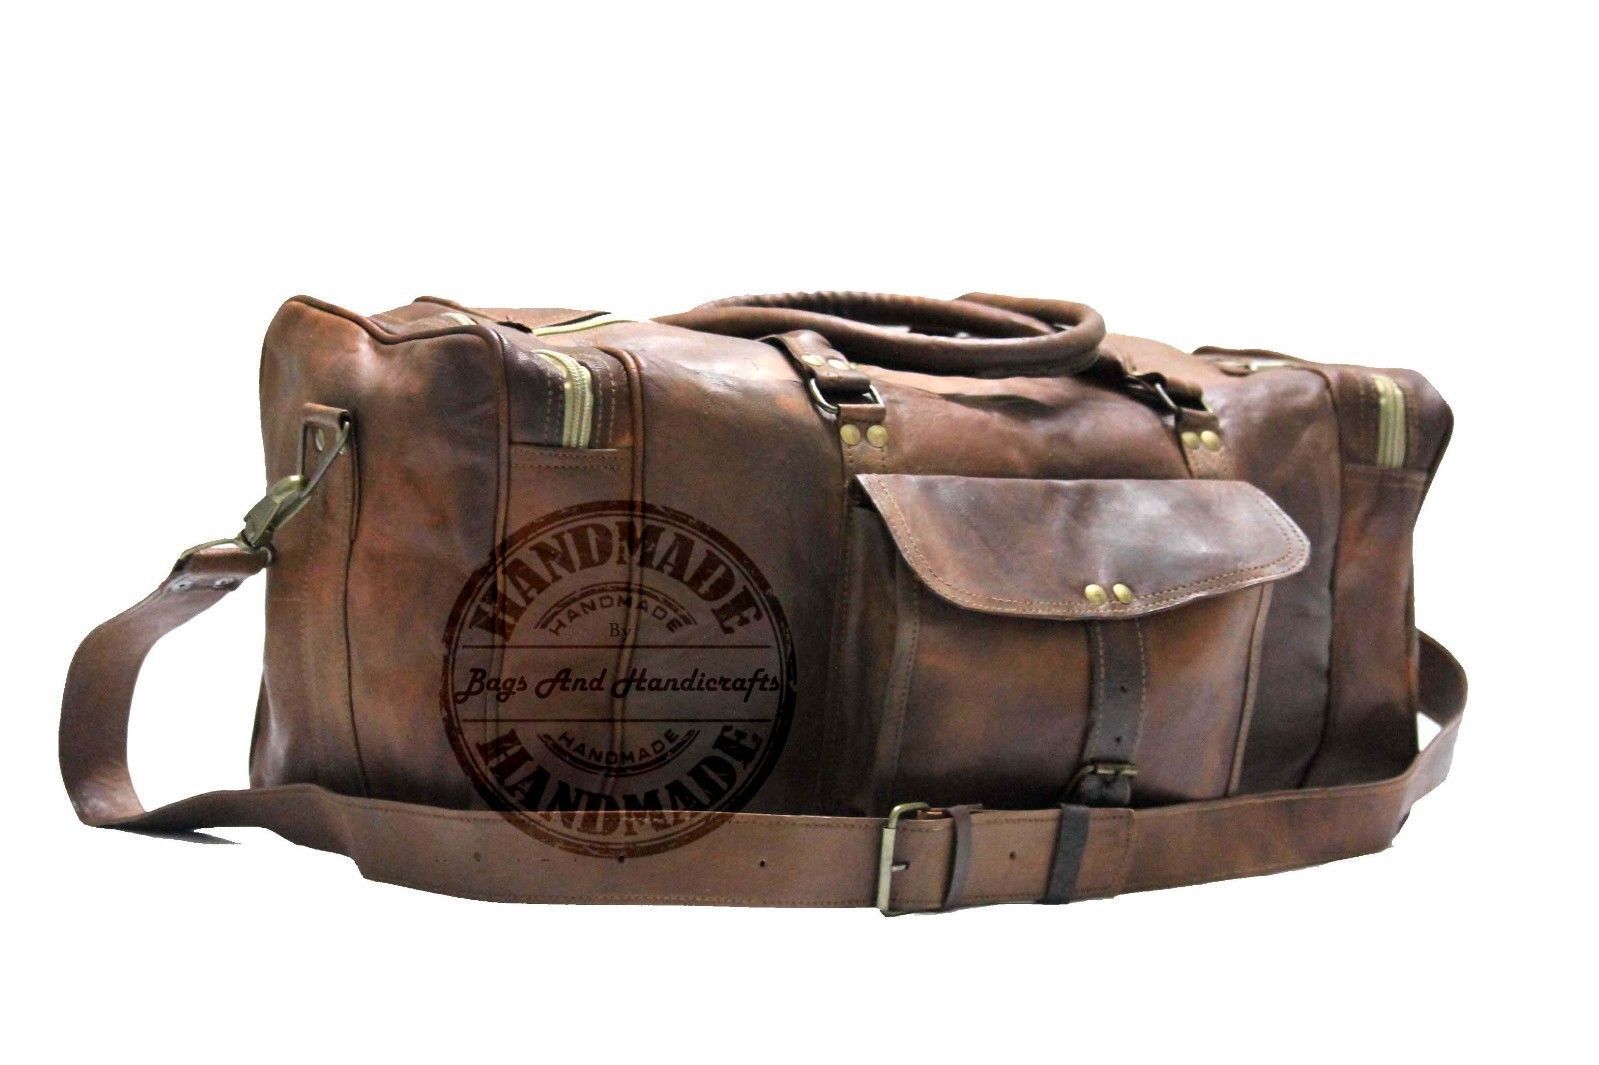 Mens Large Genuine Leather Duffle Gym Travel Bags Luggage Handbag Shoulder best - Bags